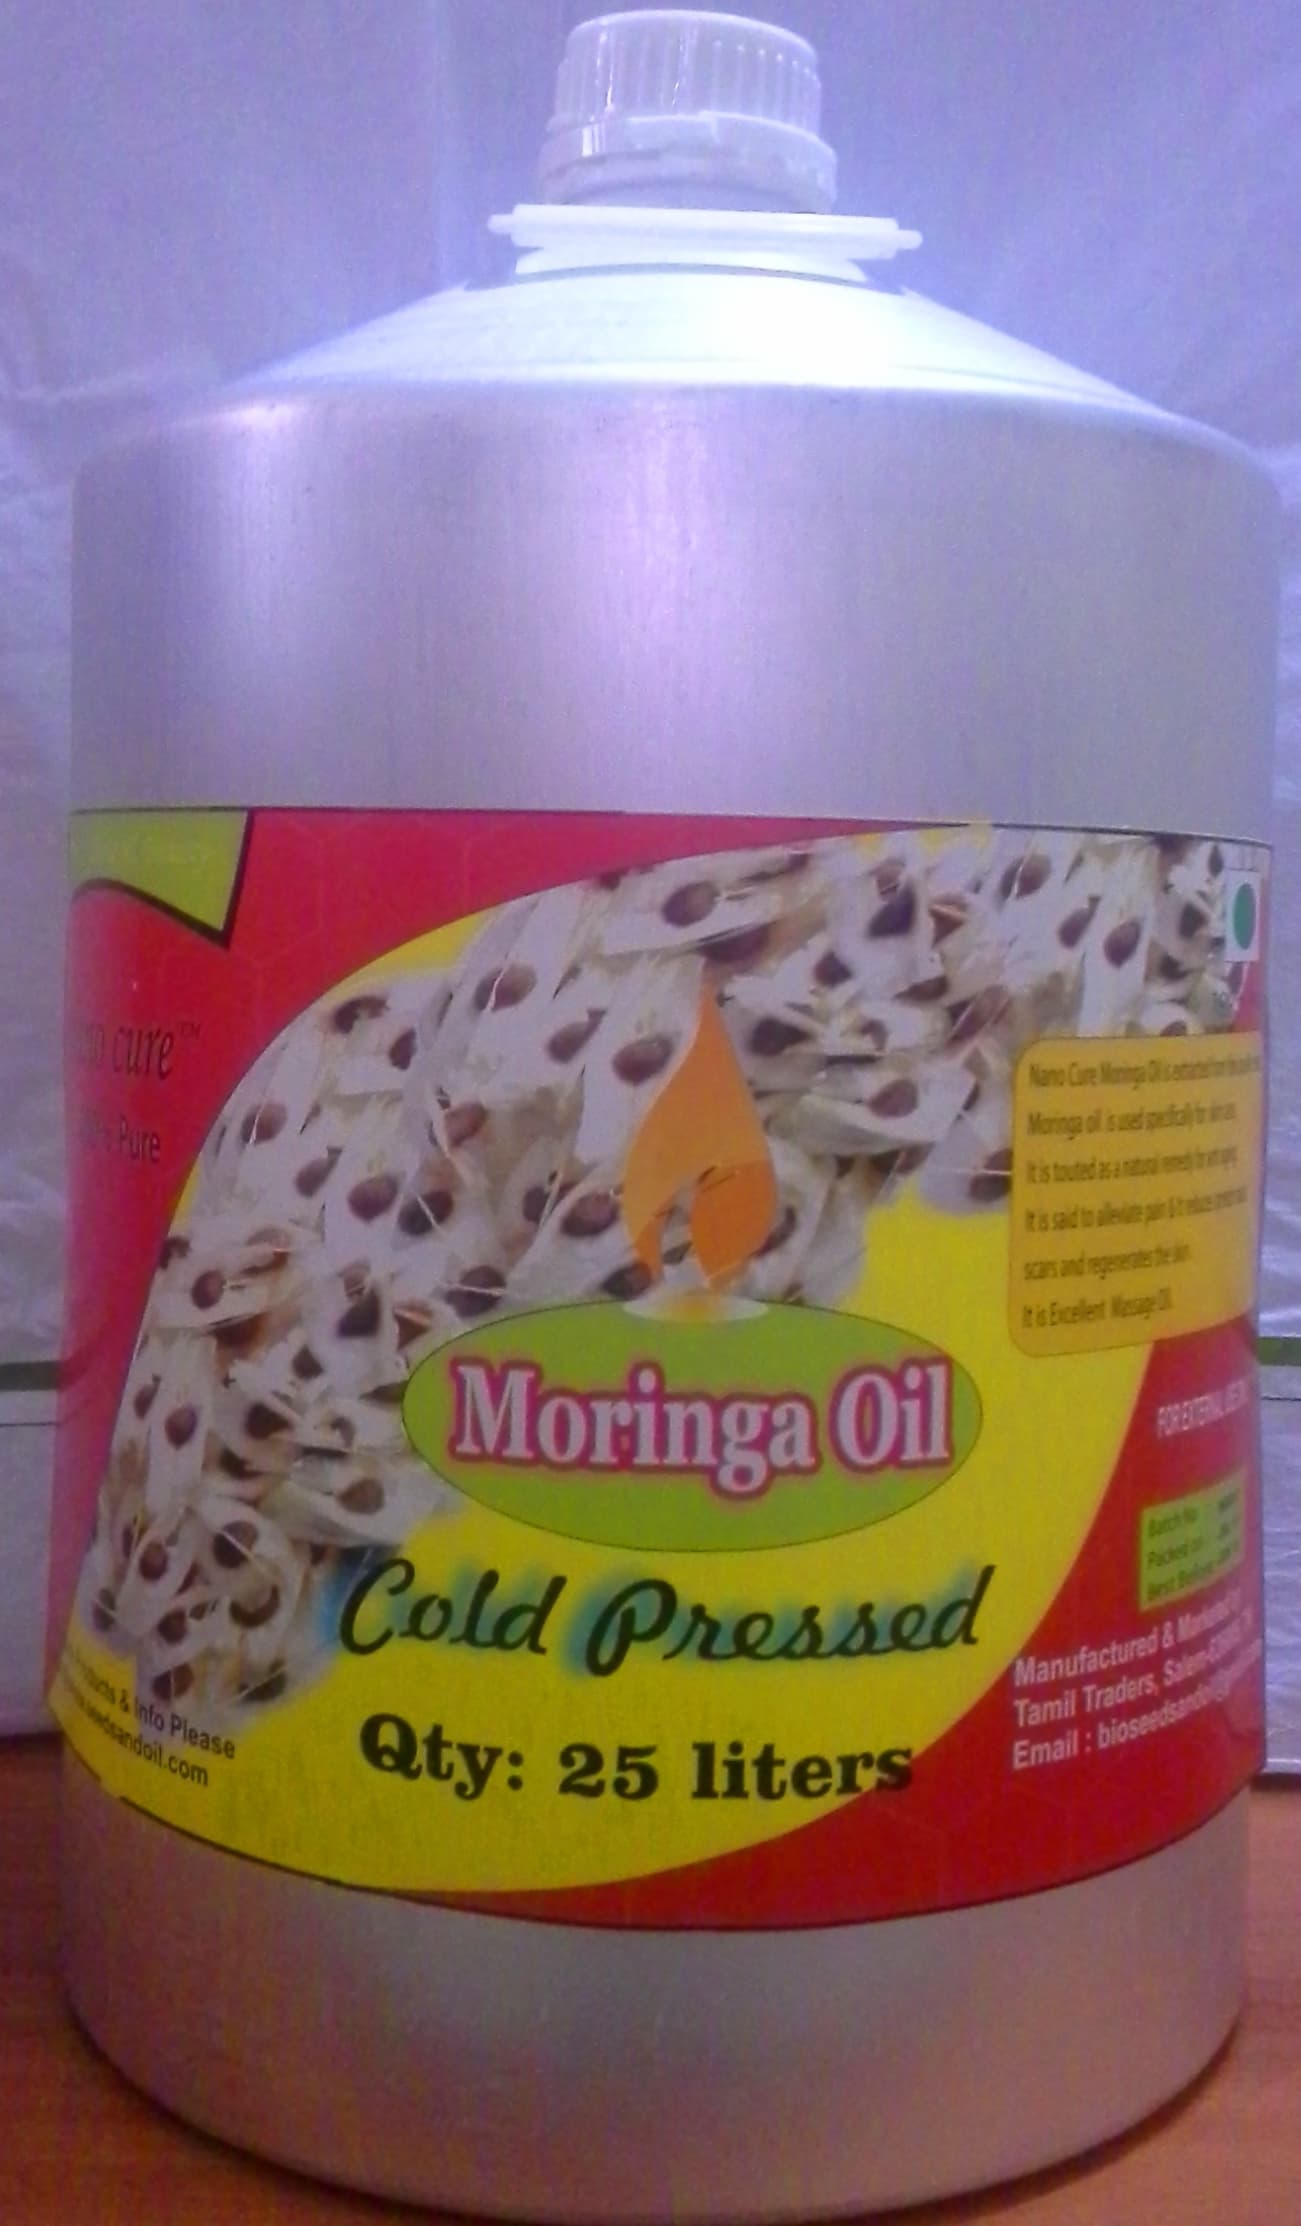 Cold Pressed Moringa oil